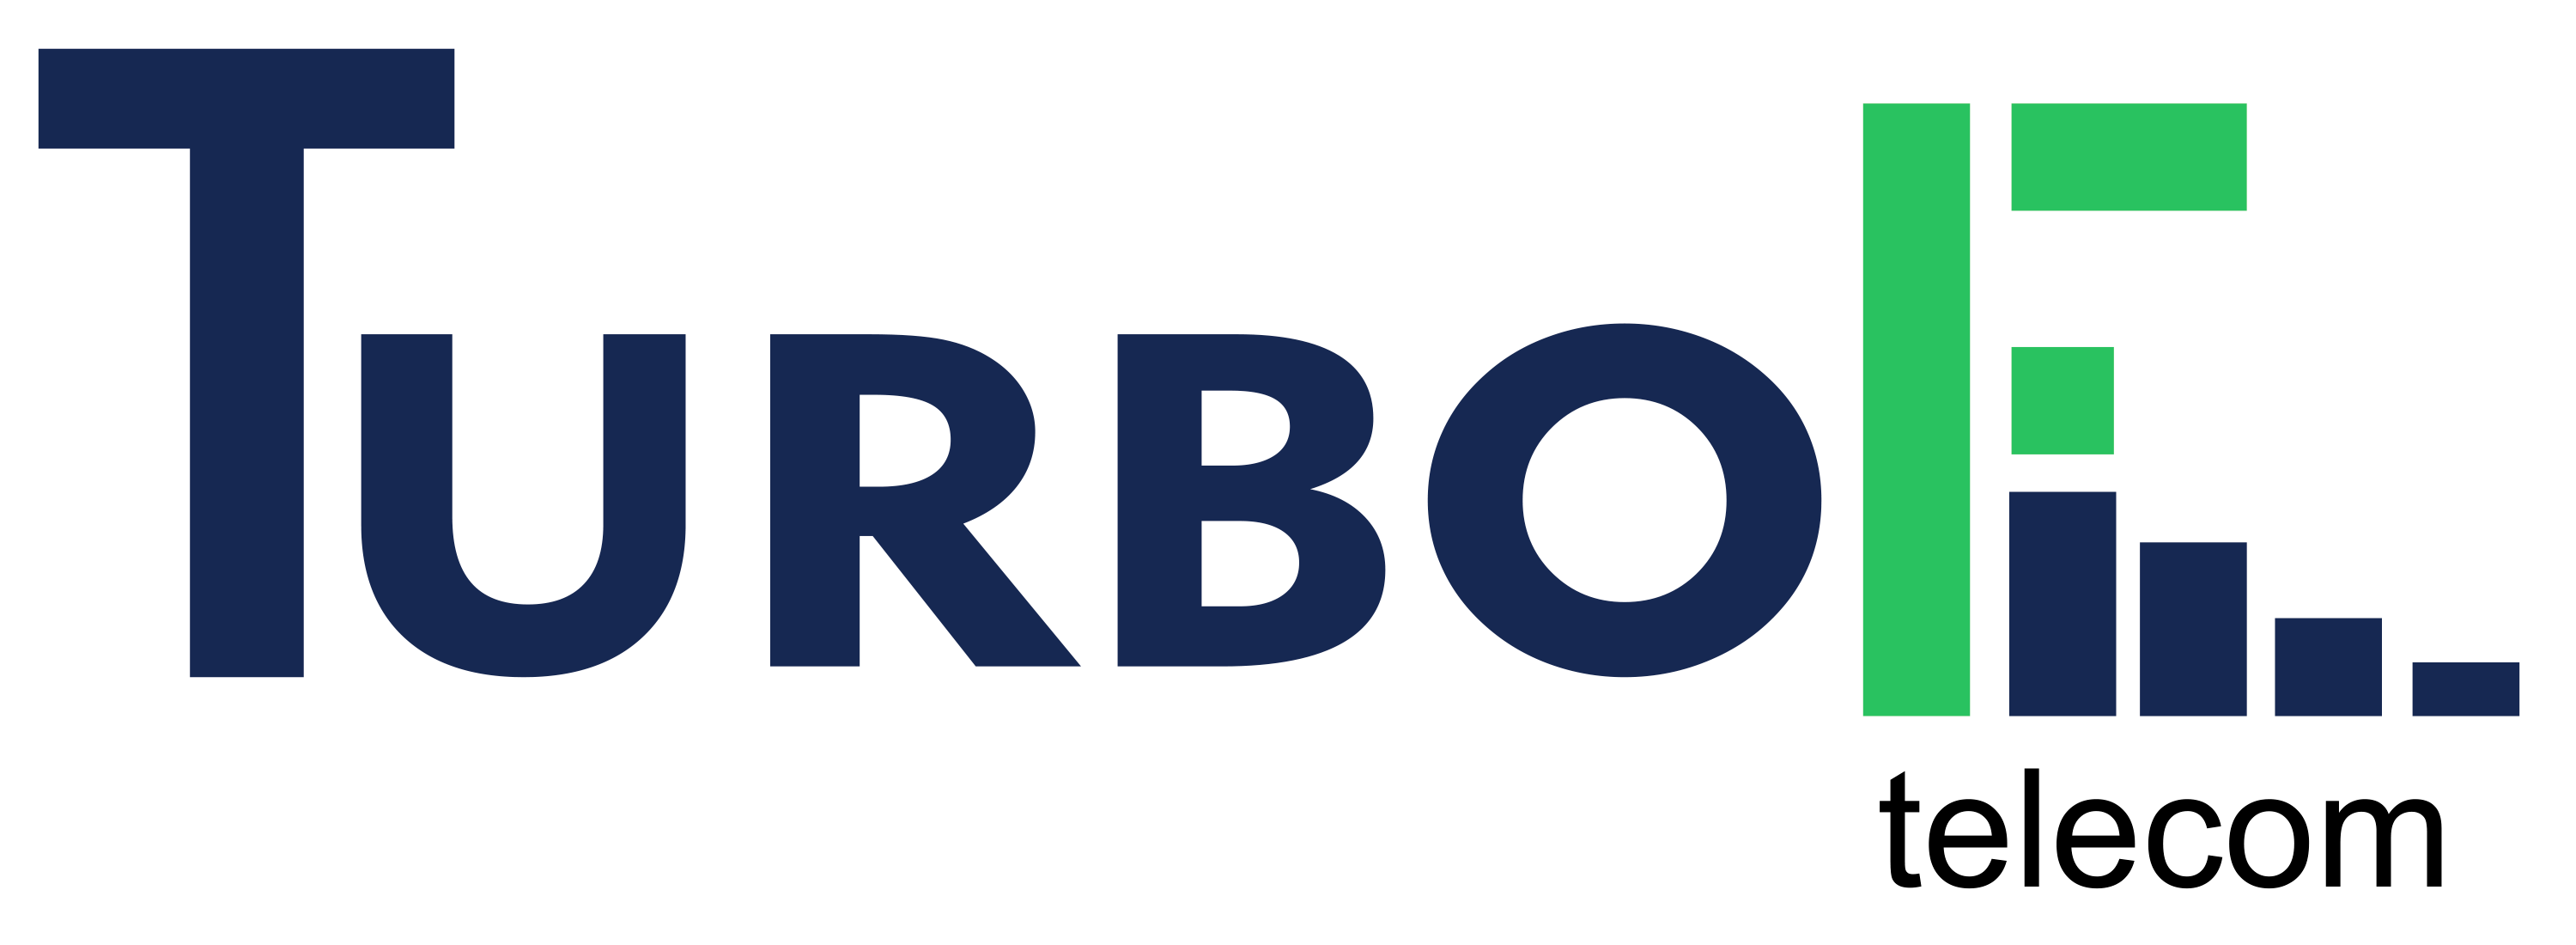 Logo TurboFi